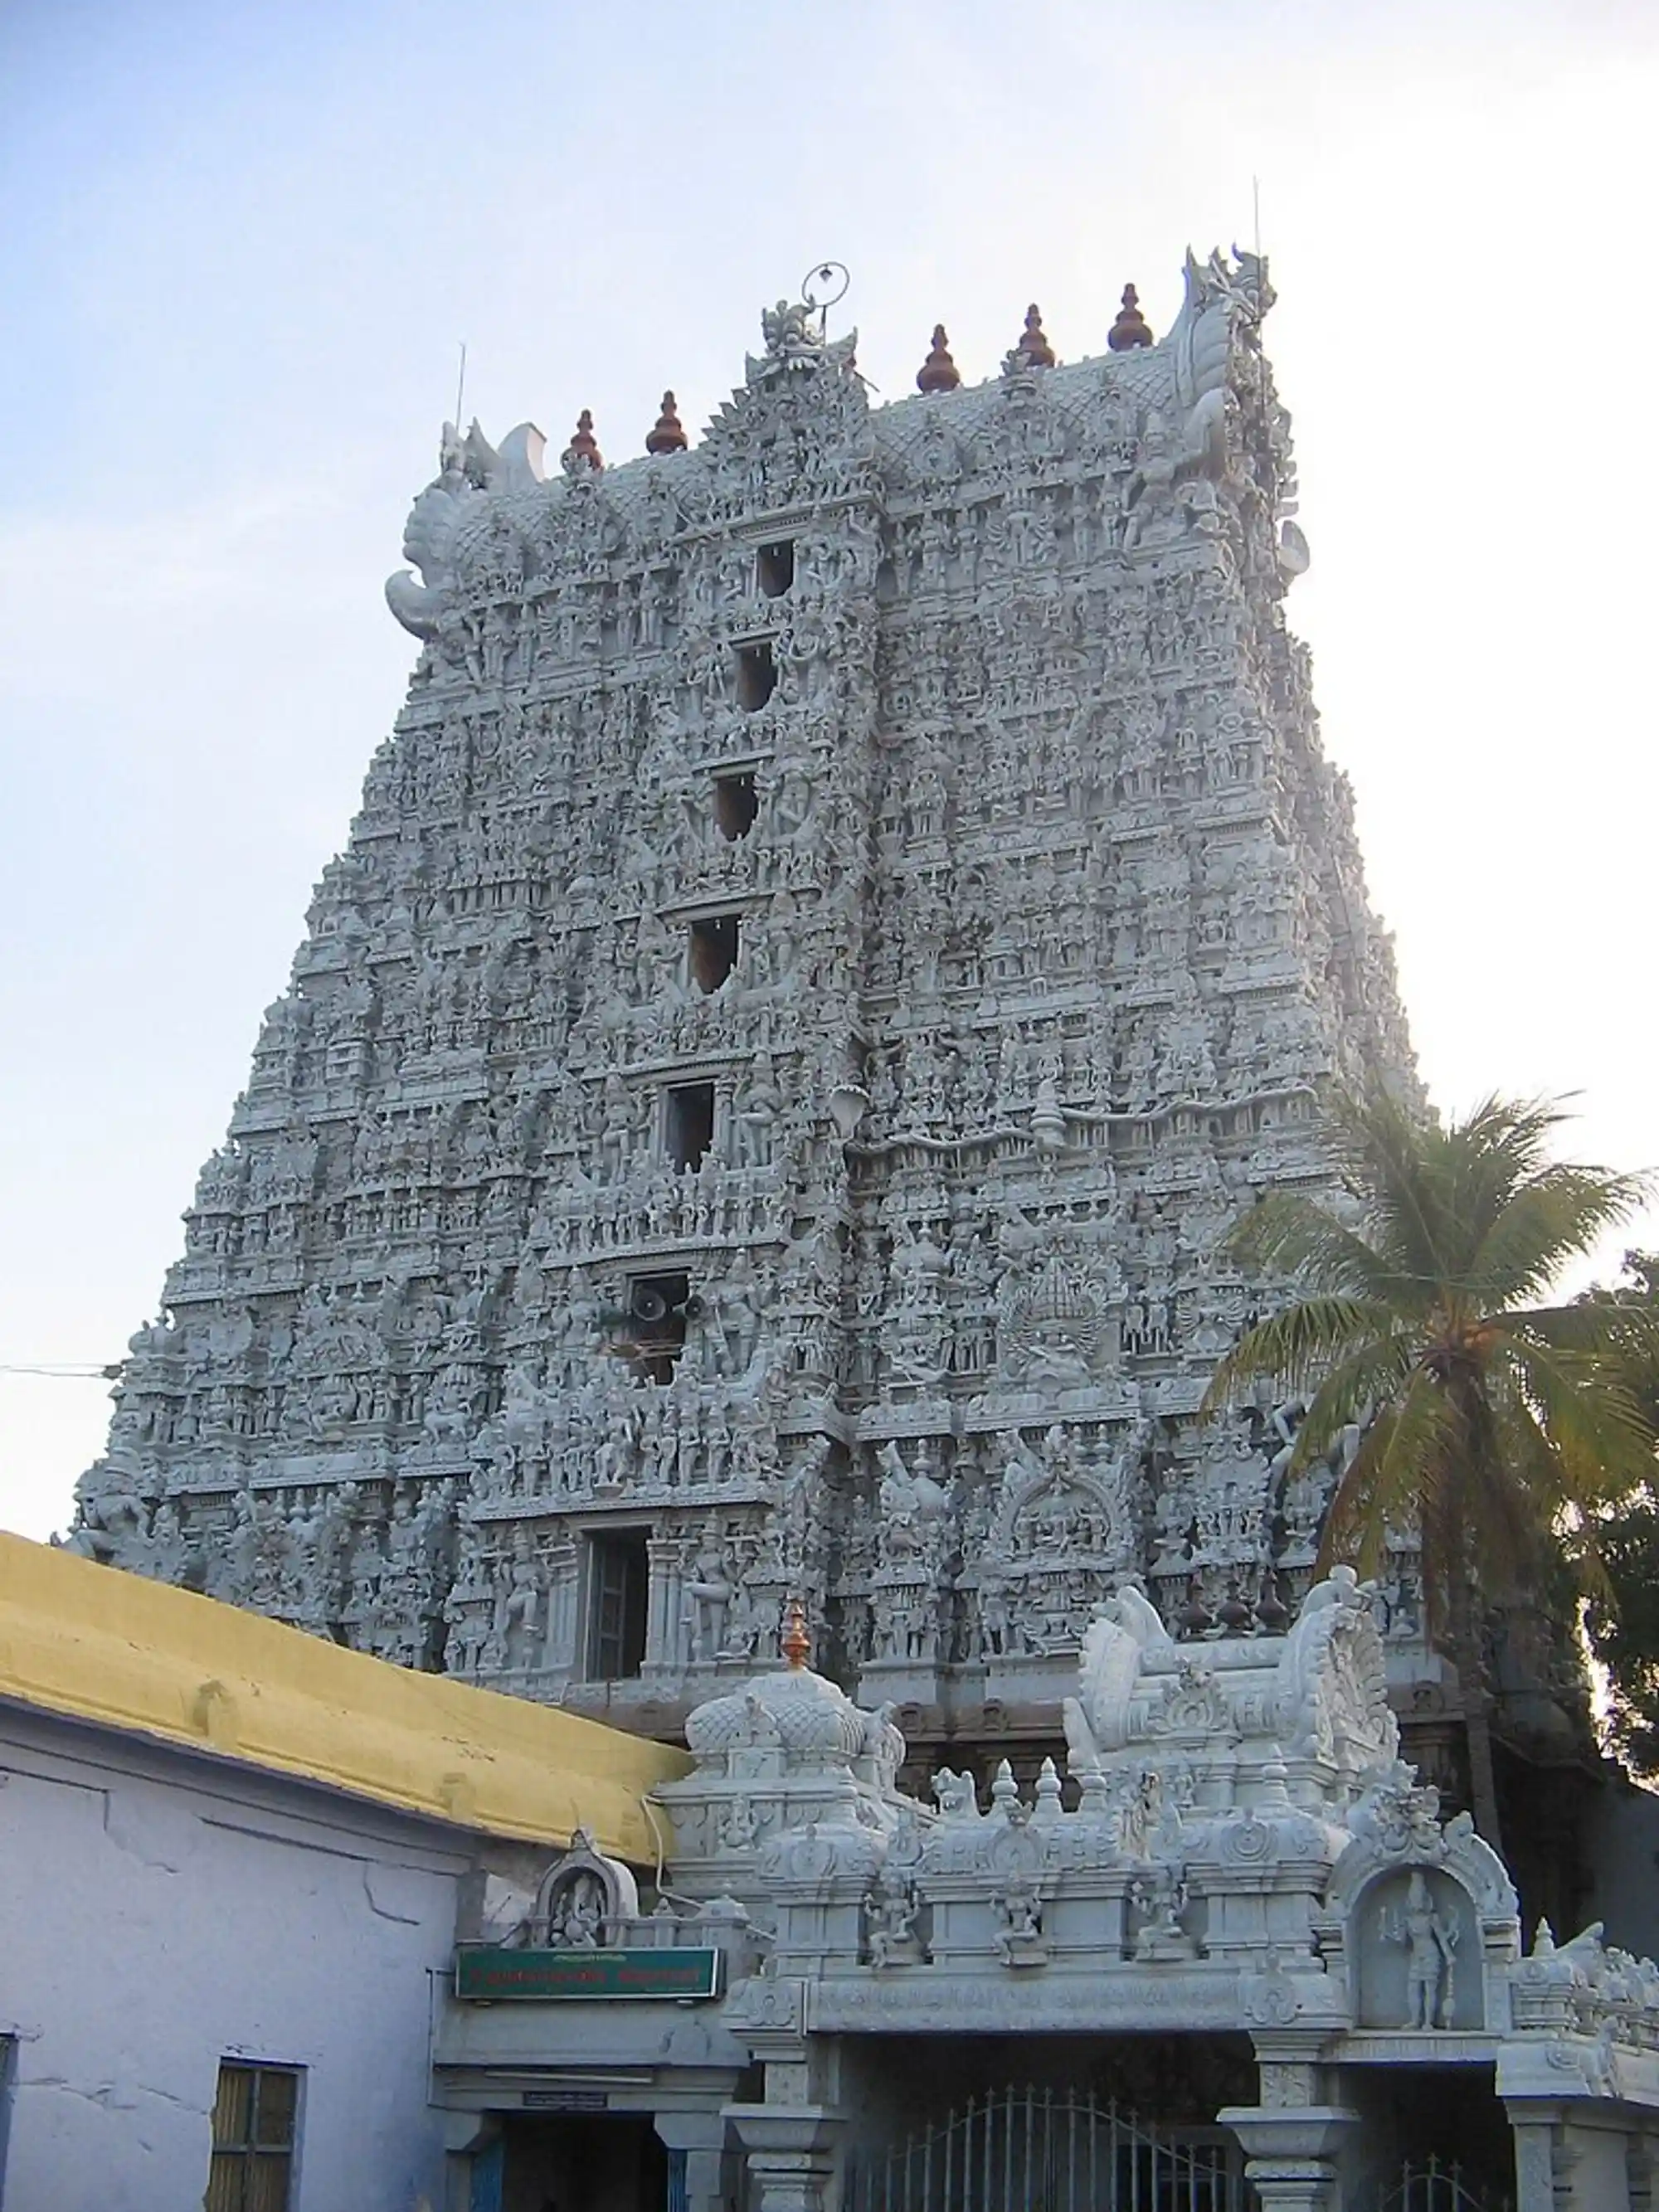 The towering white eastern Gopuram I Source: Wikimedia Commons